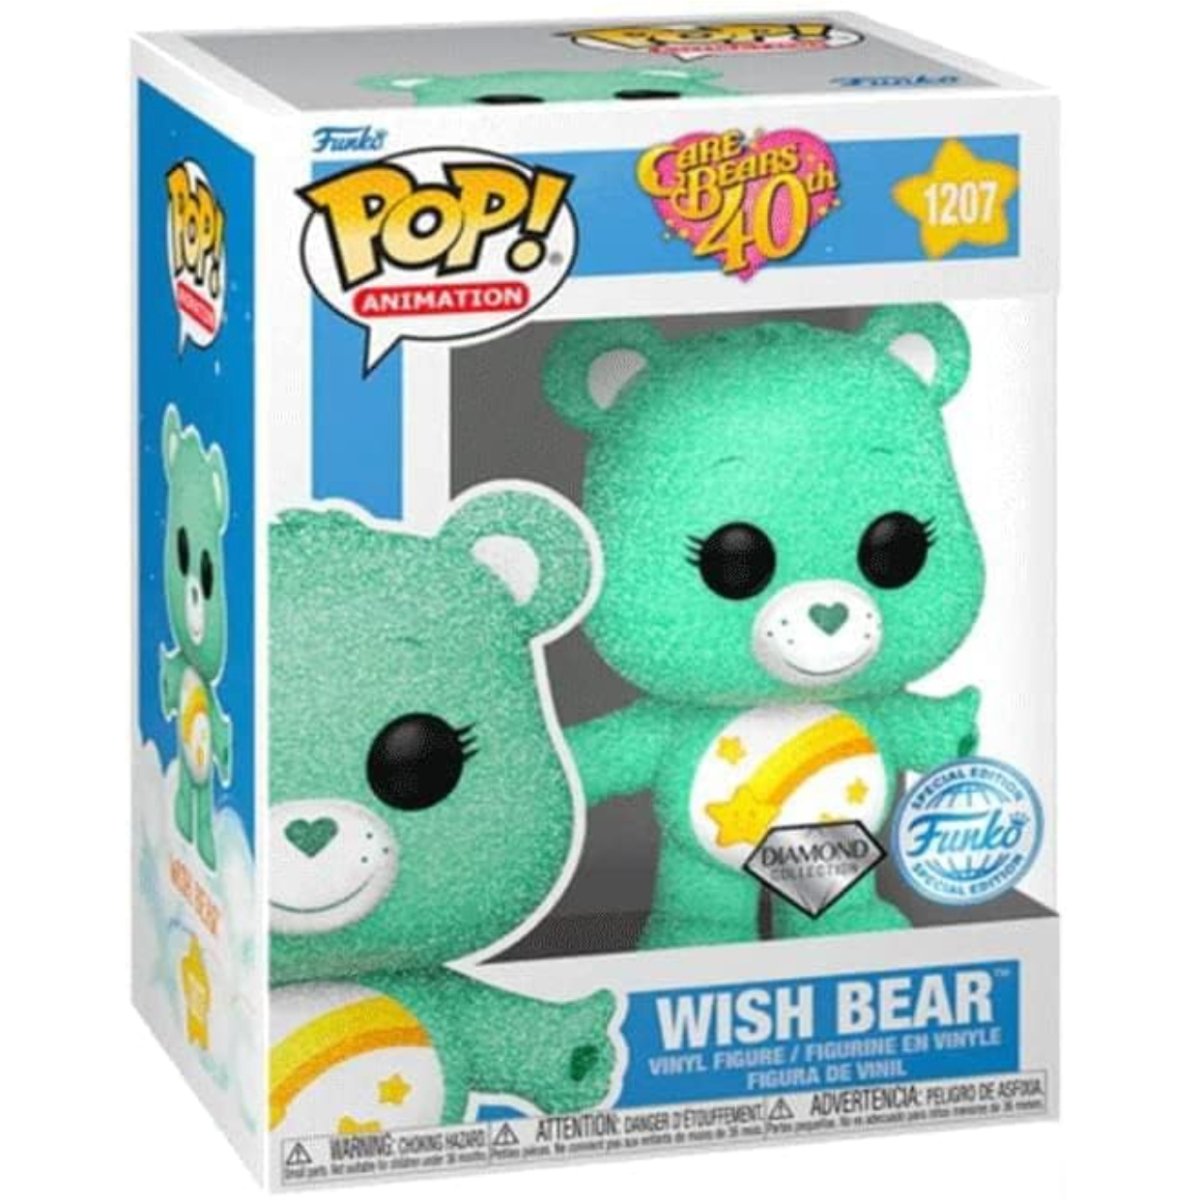 Care Bears - Wish Bear (Diamond Special Edition) #1207 - Funko Pop! Vinyl Animation - Persona Toys